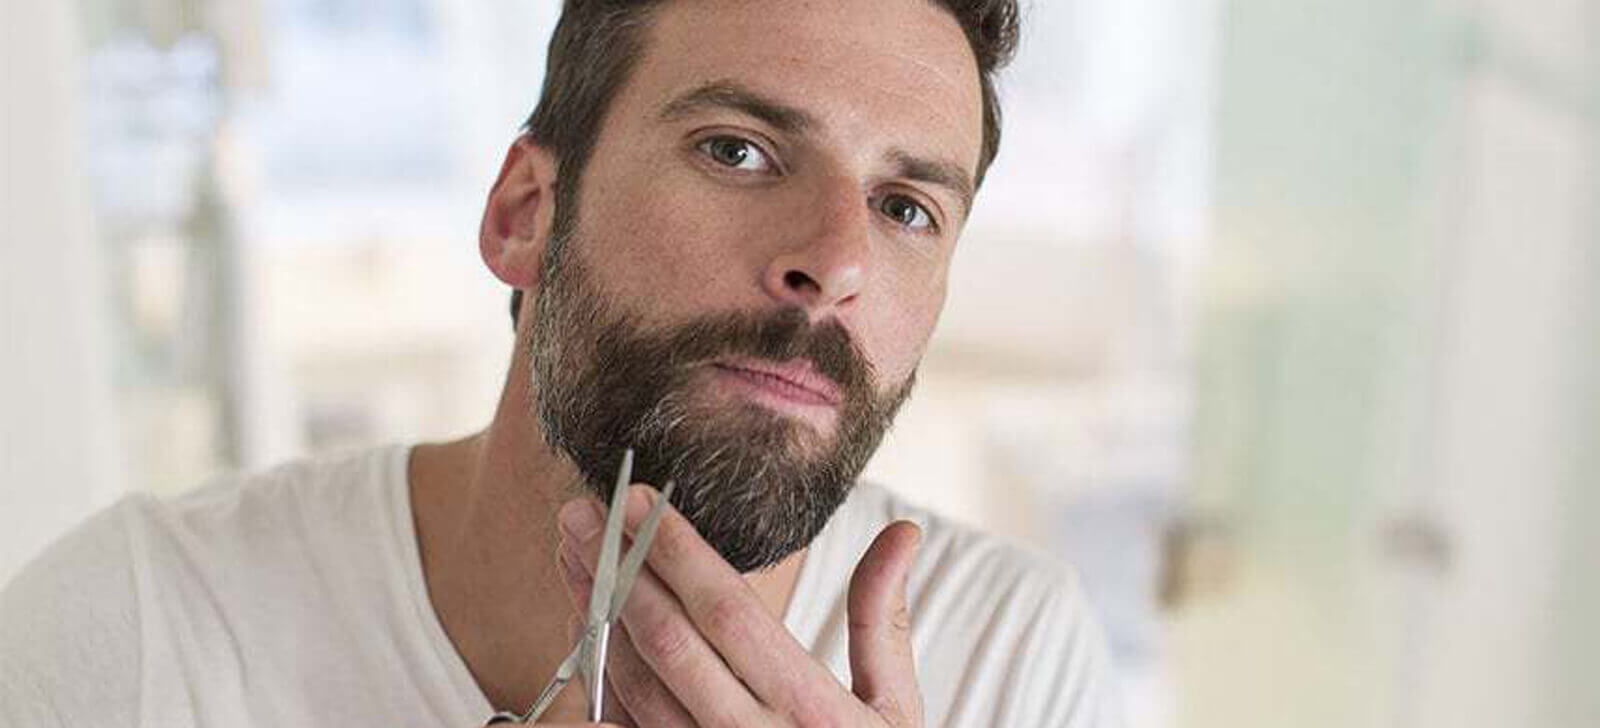 farmacia manipulacao campinas nova natural blog natureza magistral barba apare pelos barba